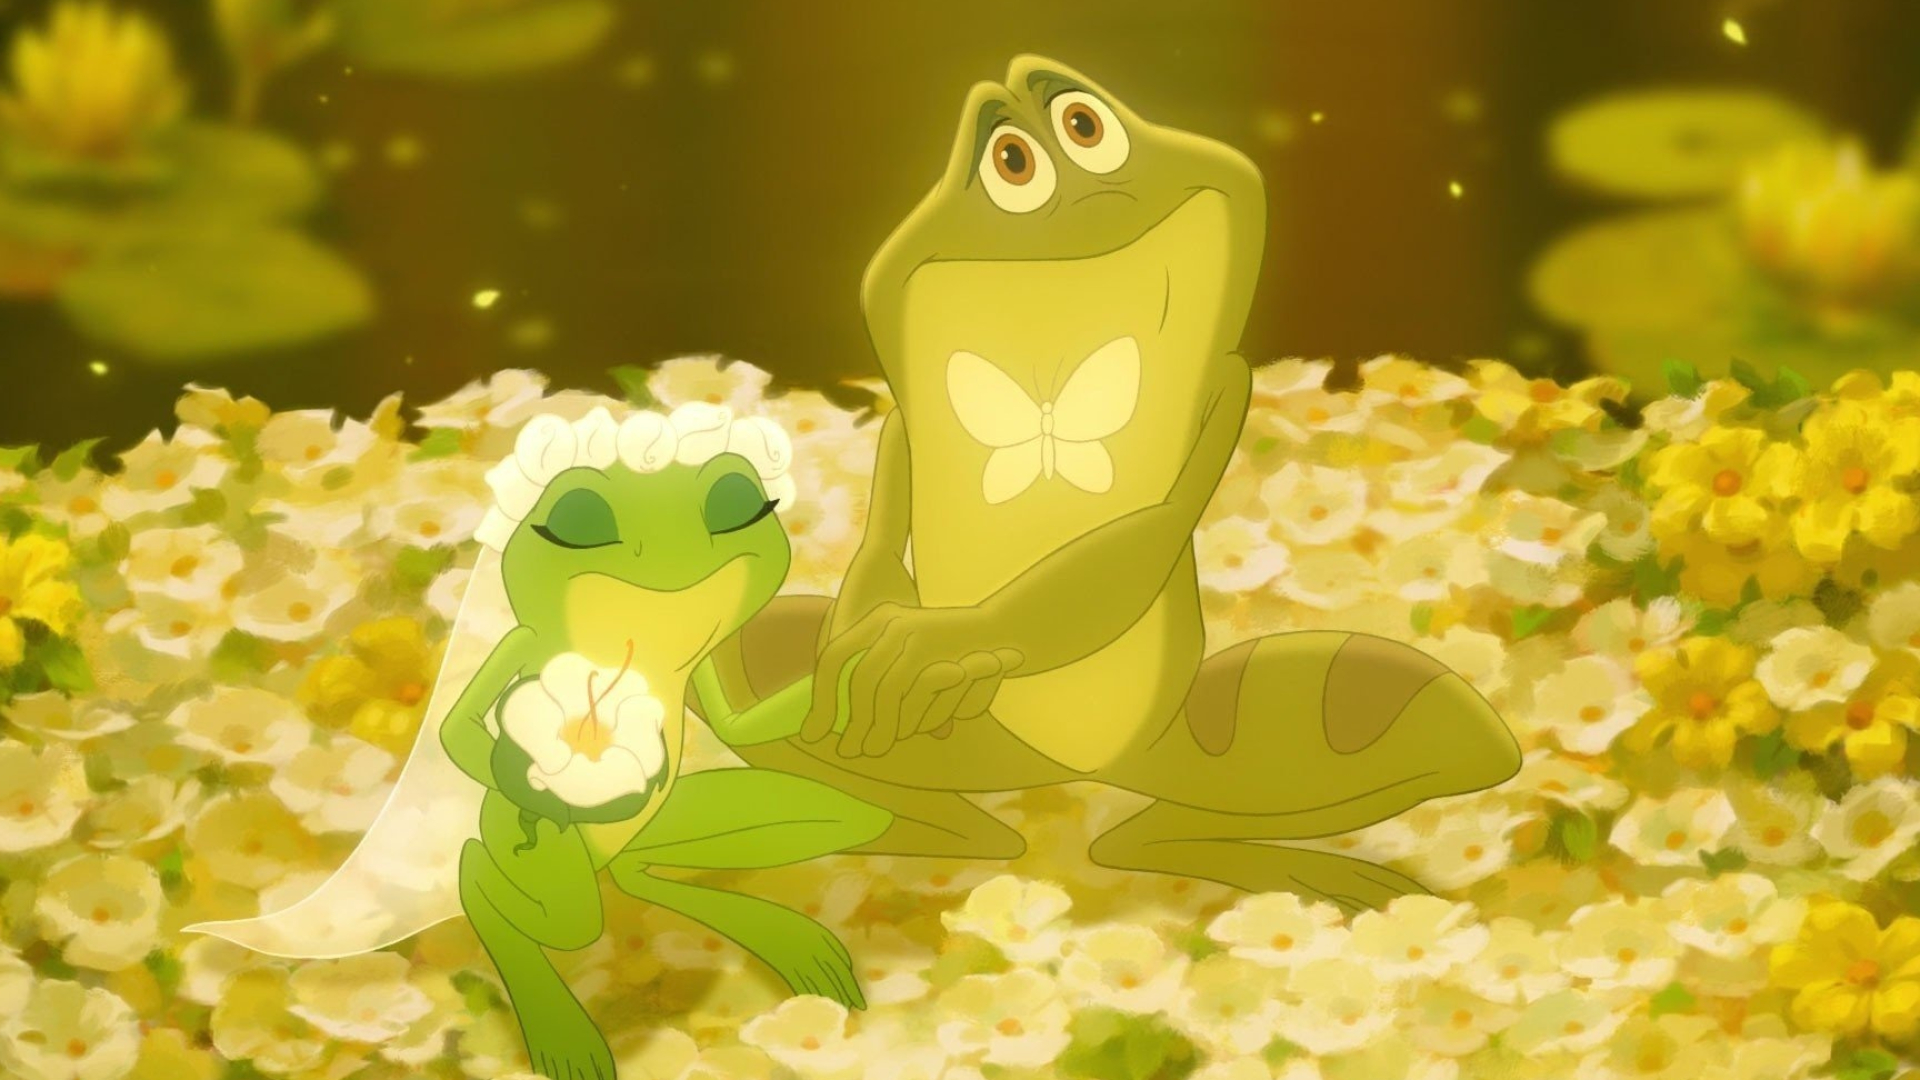 Princess and the Frog, Fantasy romance, Musical animation, Desktop backgrounds, 1920x1080 Full HD Desktop